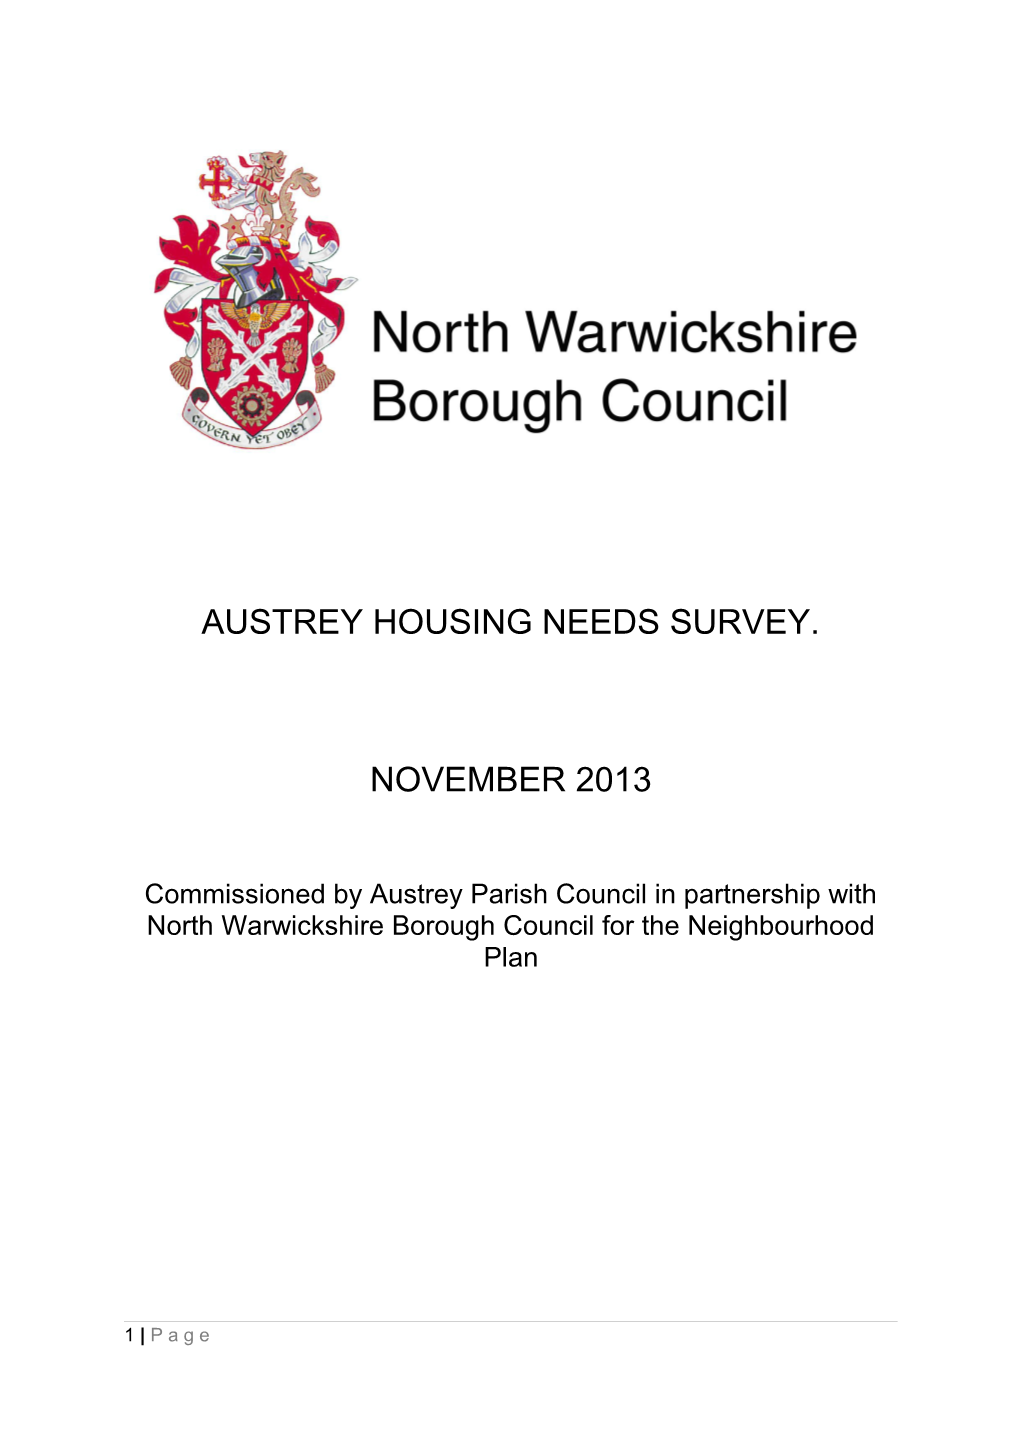 Austrey Housing Needs Survey